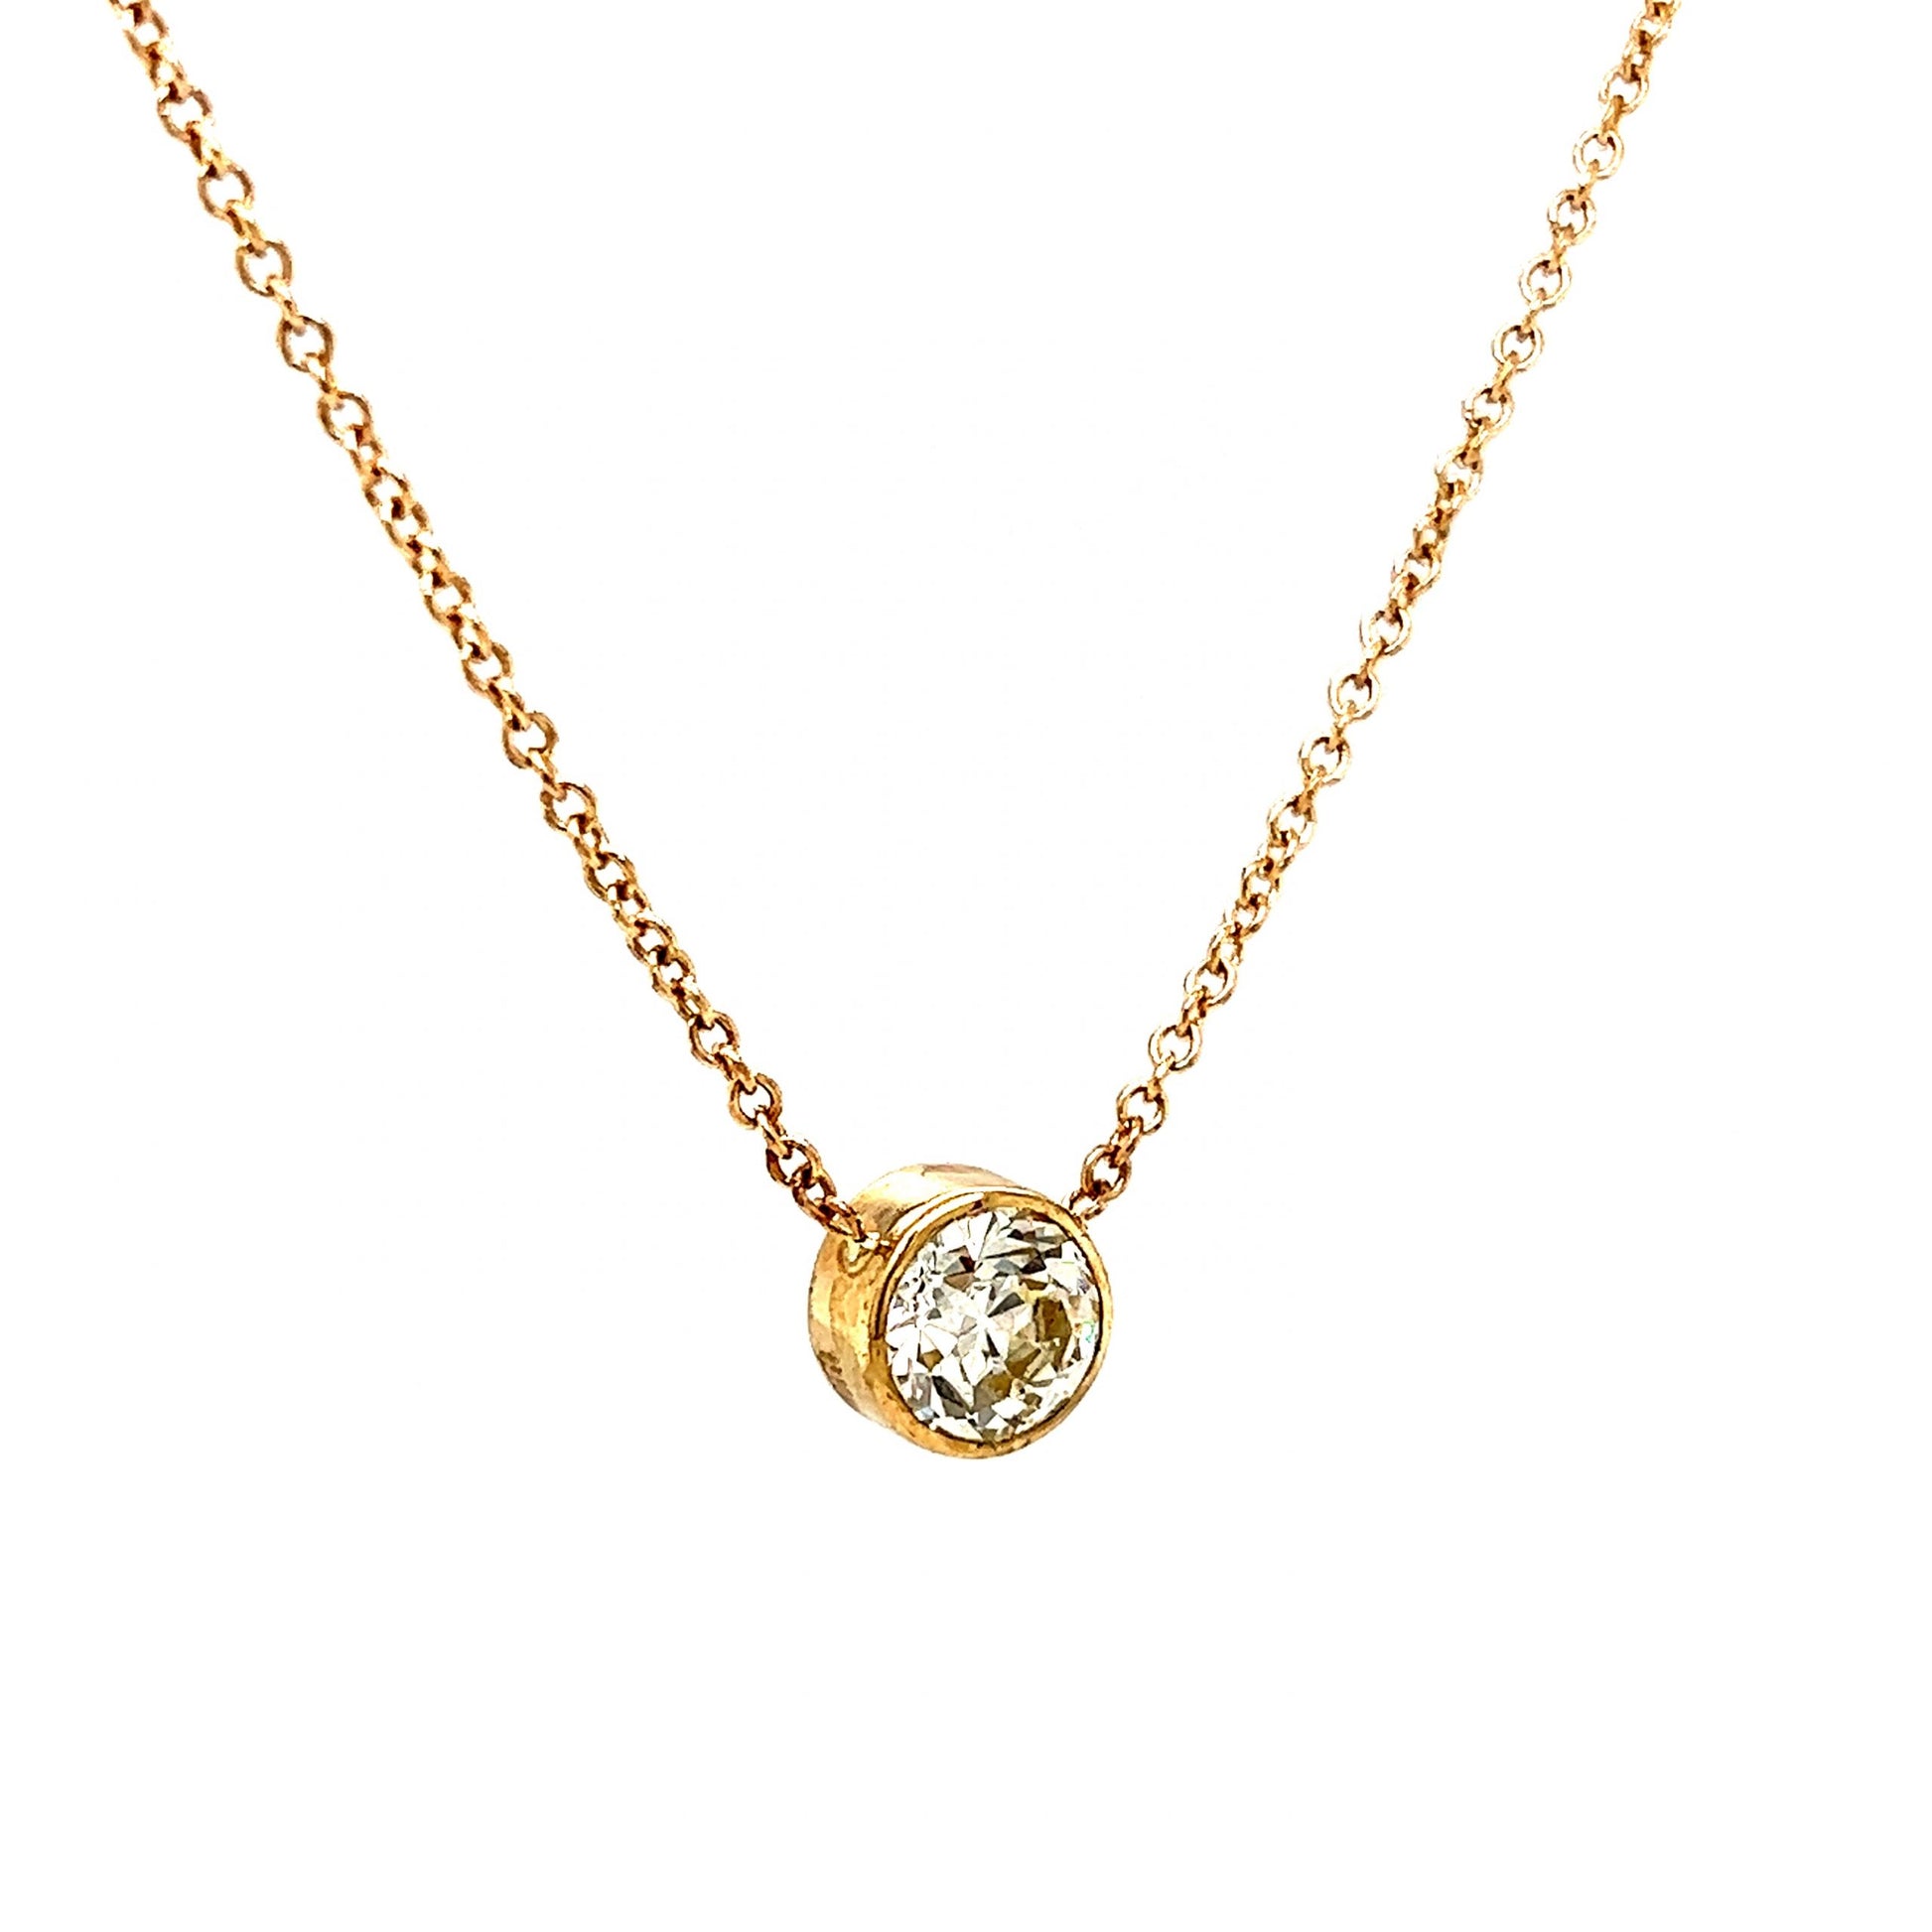 1.36 Bezel Set Old European Diamond Necklace in 14k Gold